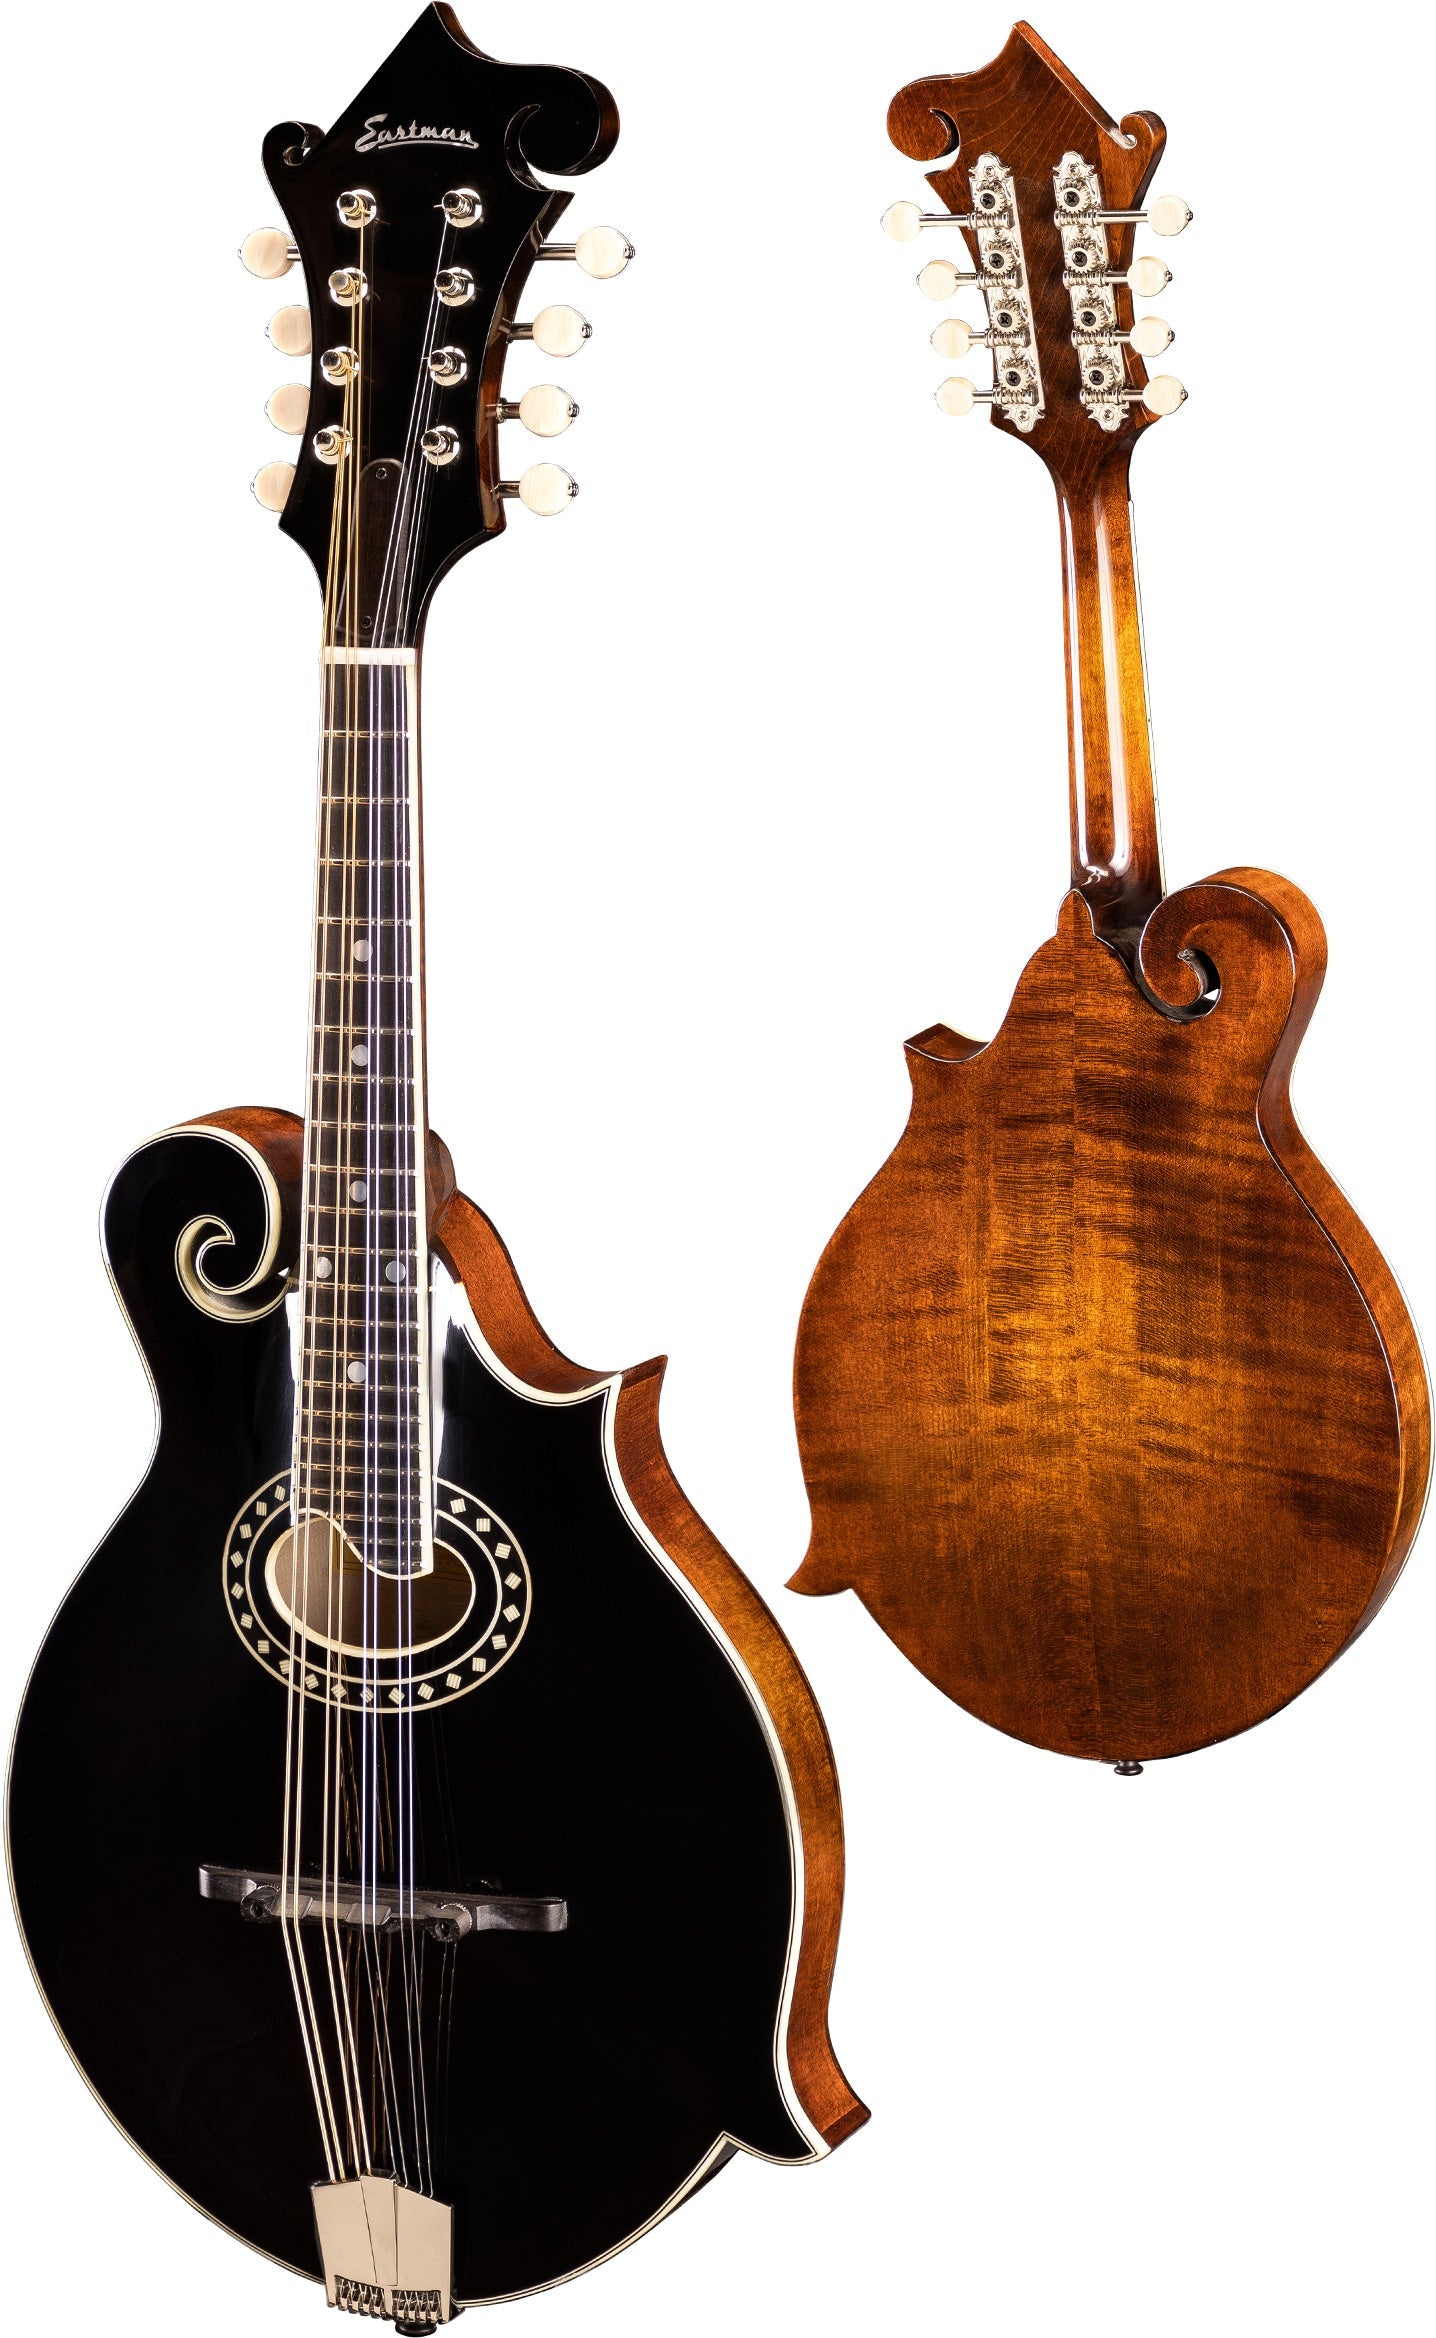 Eastman MD514-BK-LTD F-style Mandolin, Mandolin for sale at Richards Guitars.